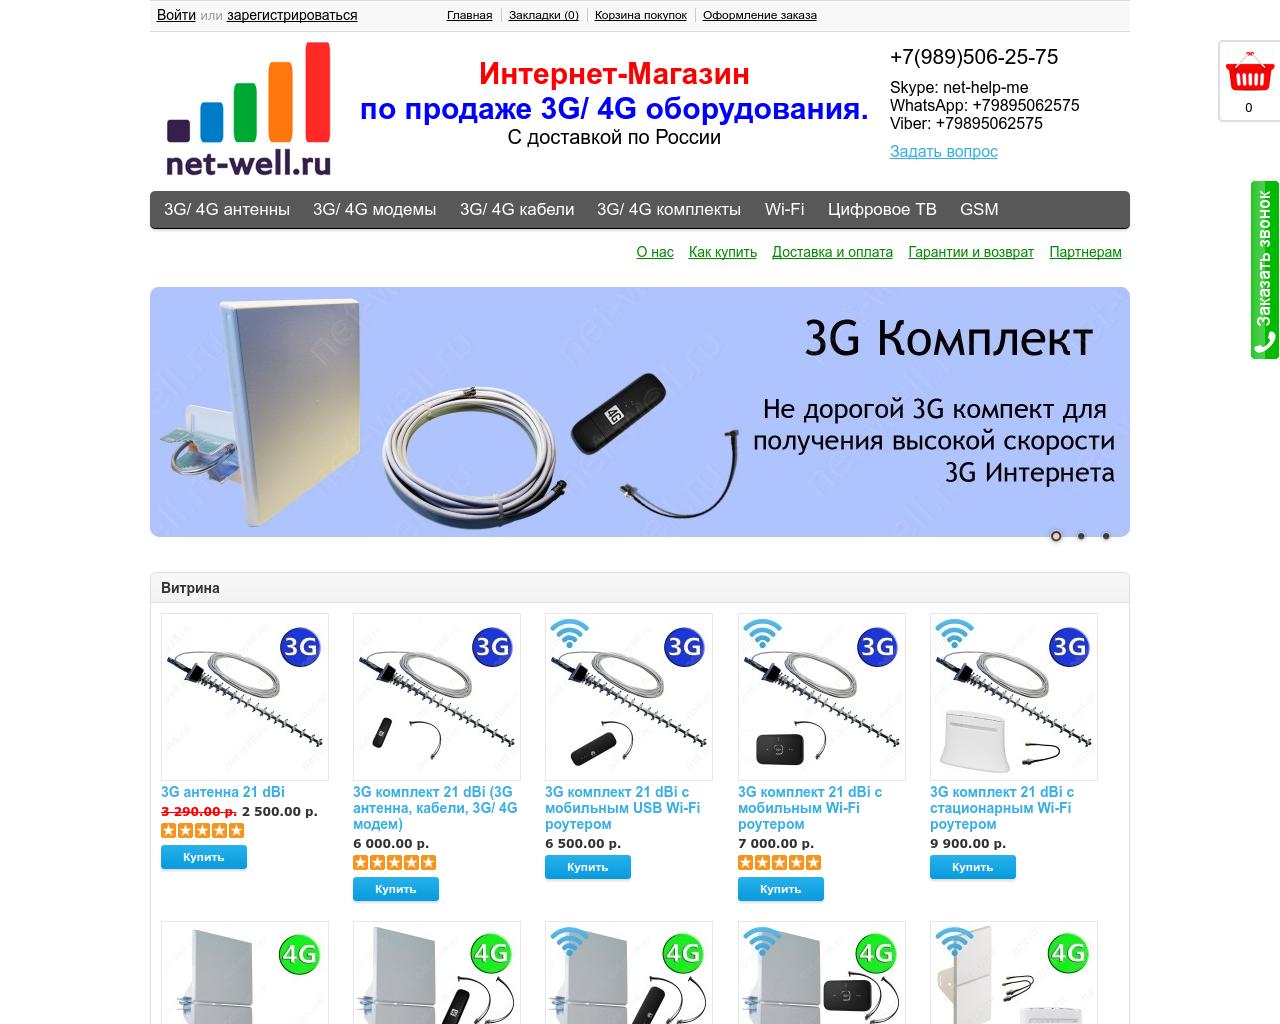 Изображение сайта net-well.ru в разрешении 1280x1024